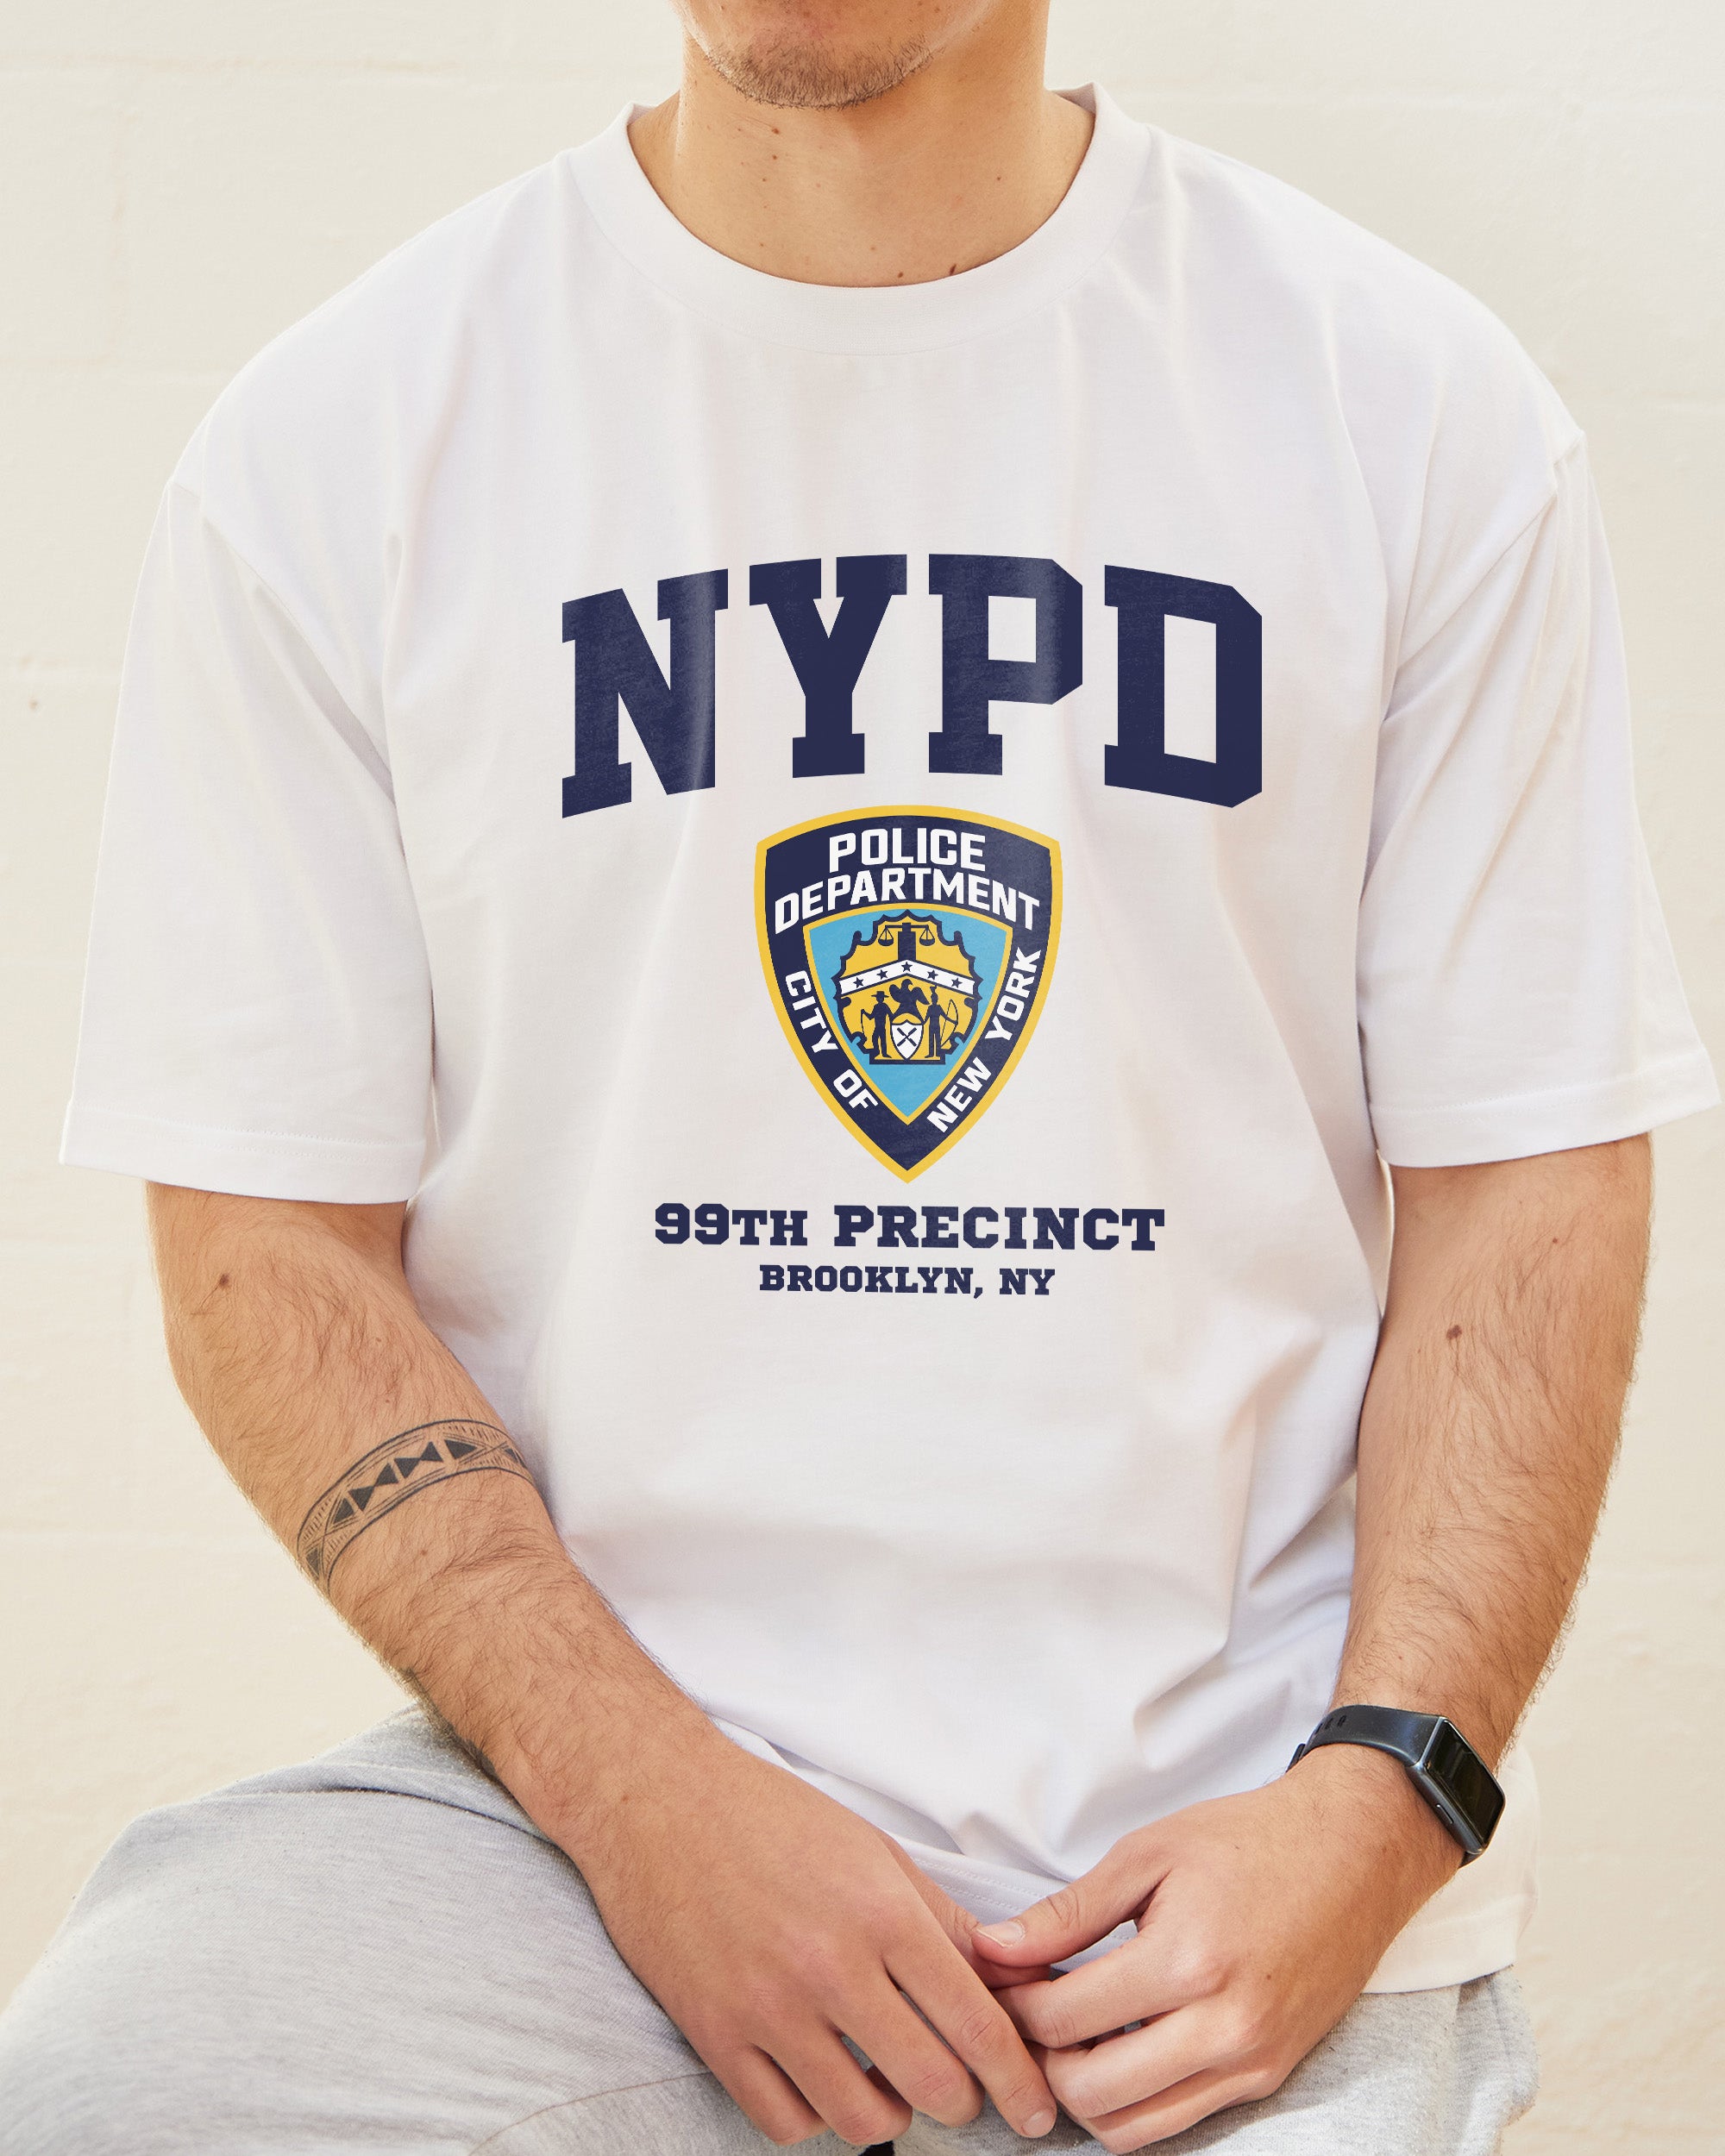 99th Precinct T-Shirt